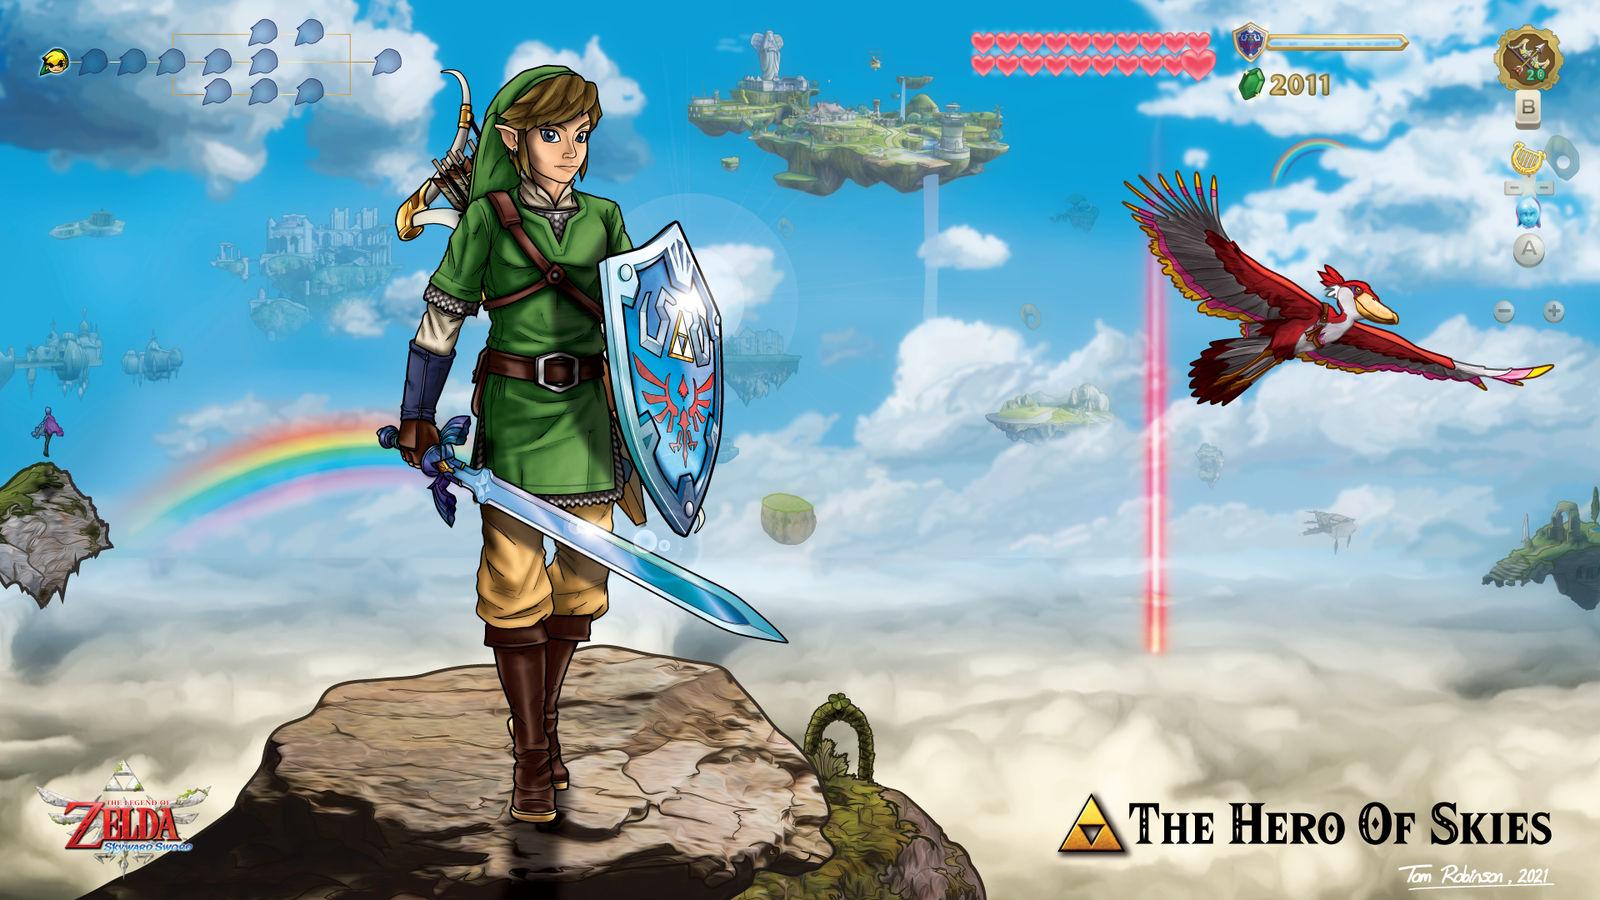 Legend Of Zelda Nes Era Authentic Print Ad / Poster Game Promo Art